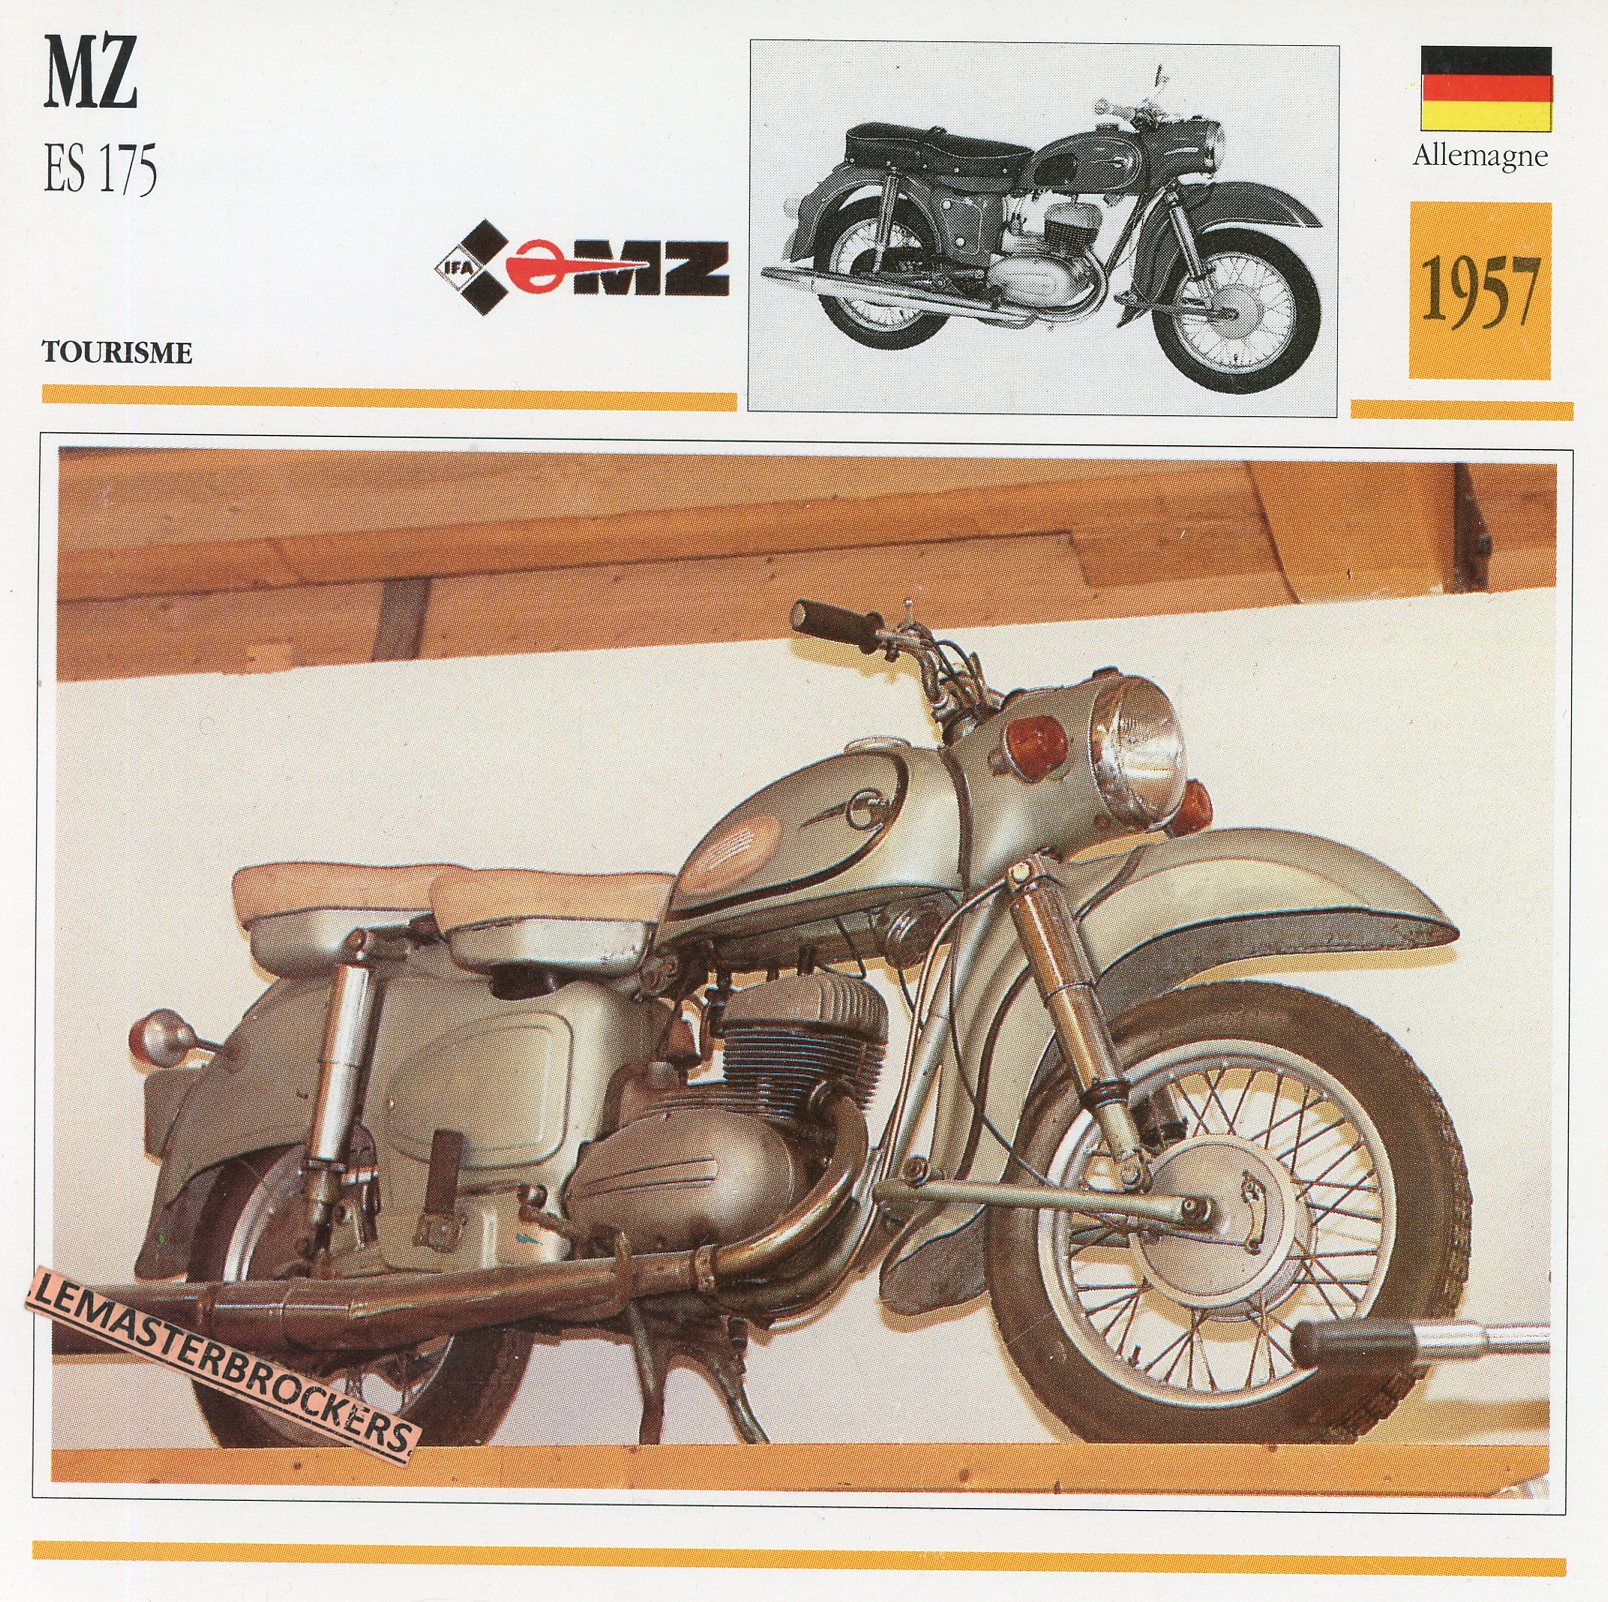 FICHE-MOTO-MZ-ES175-1957-LEMASTERBROCKERS